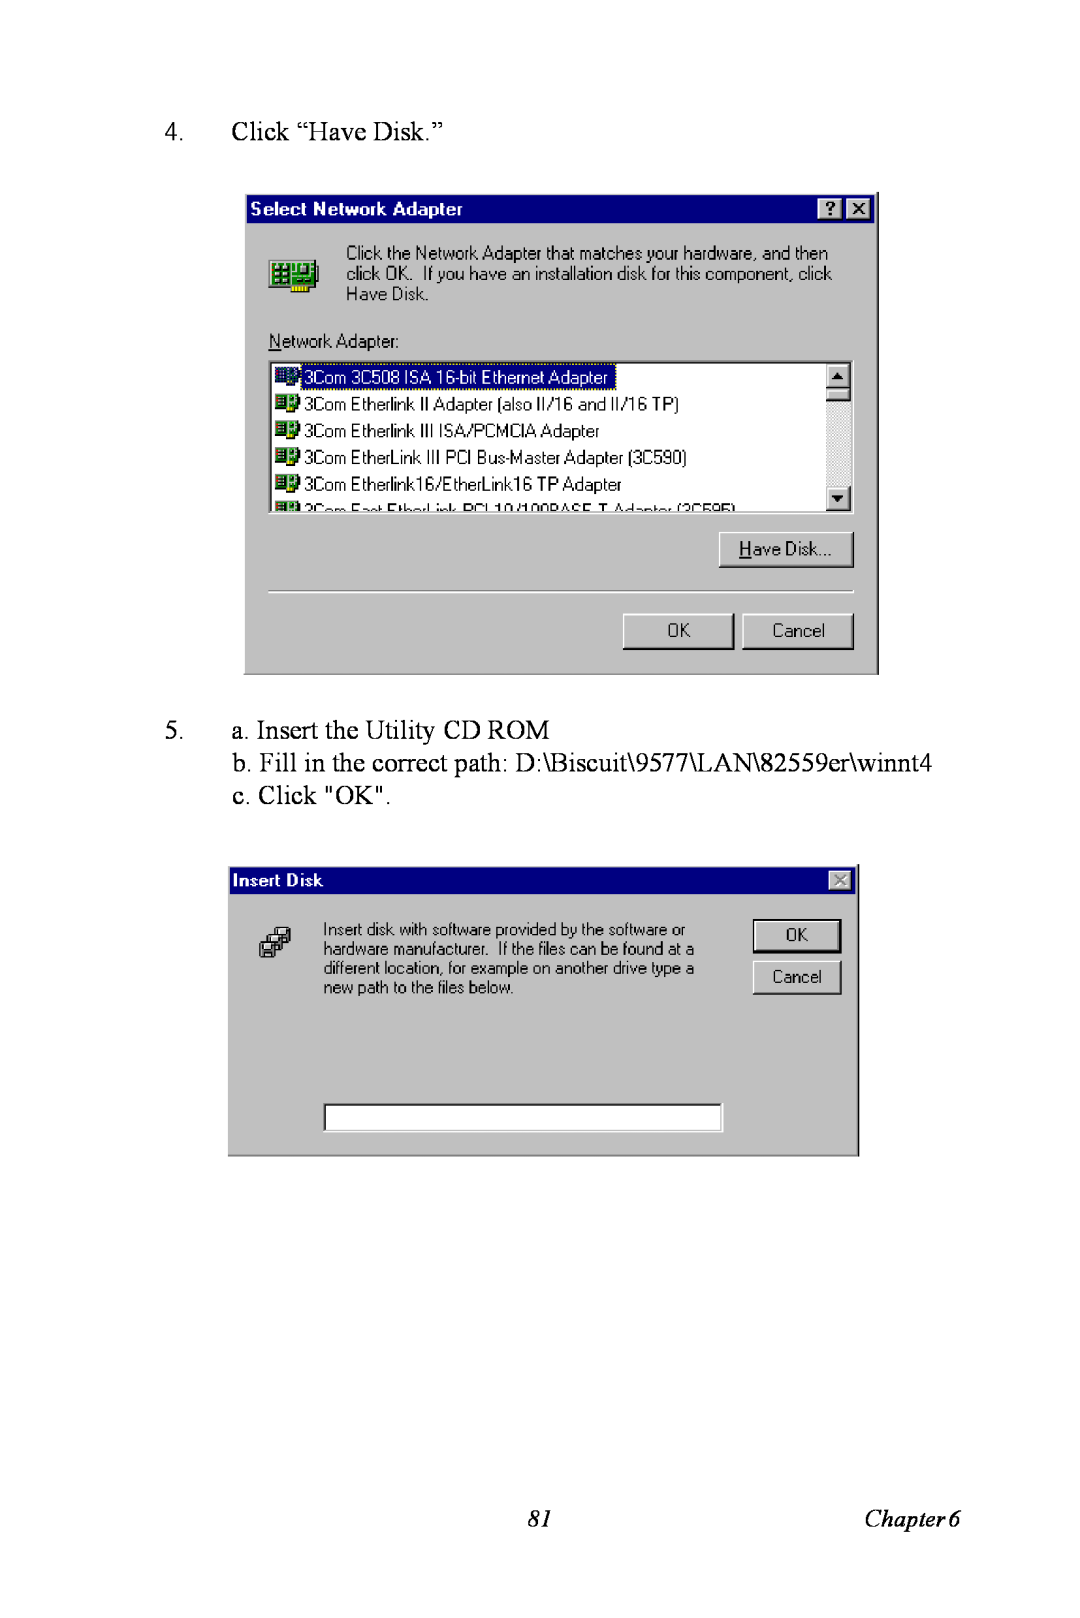 Advantech PCA-6774 user manual Click “Have Disk.” 5. a. Insert the Utility CD ROM, c. Click OK 